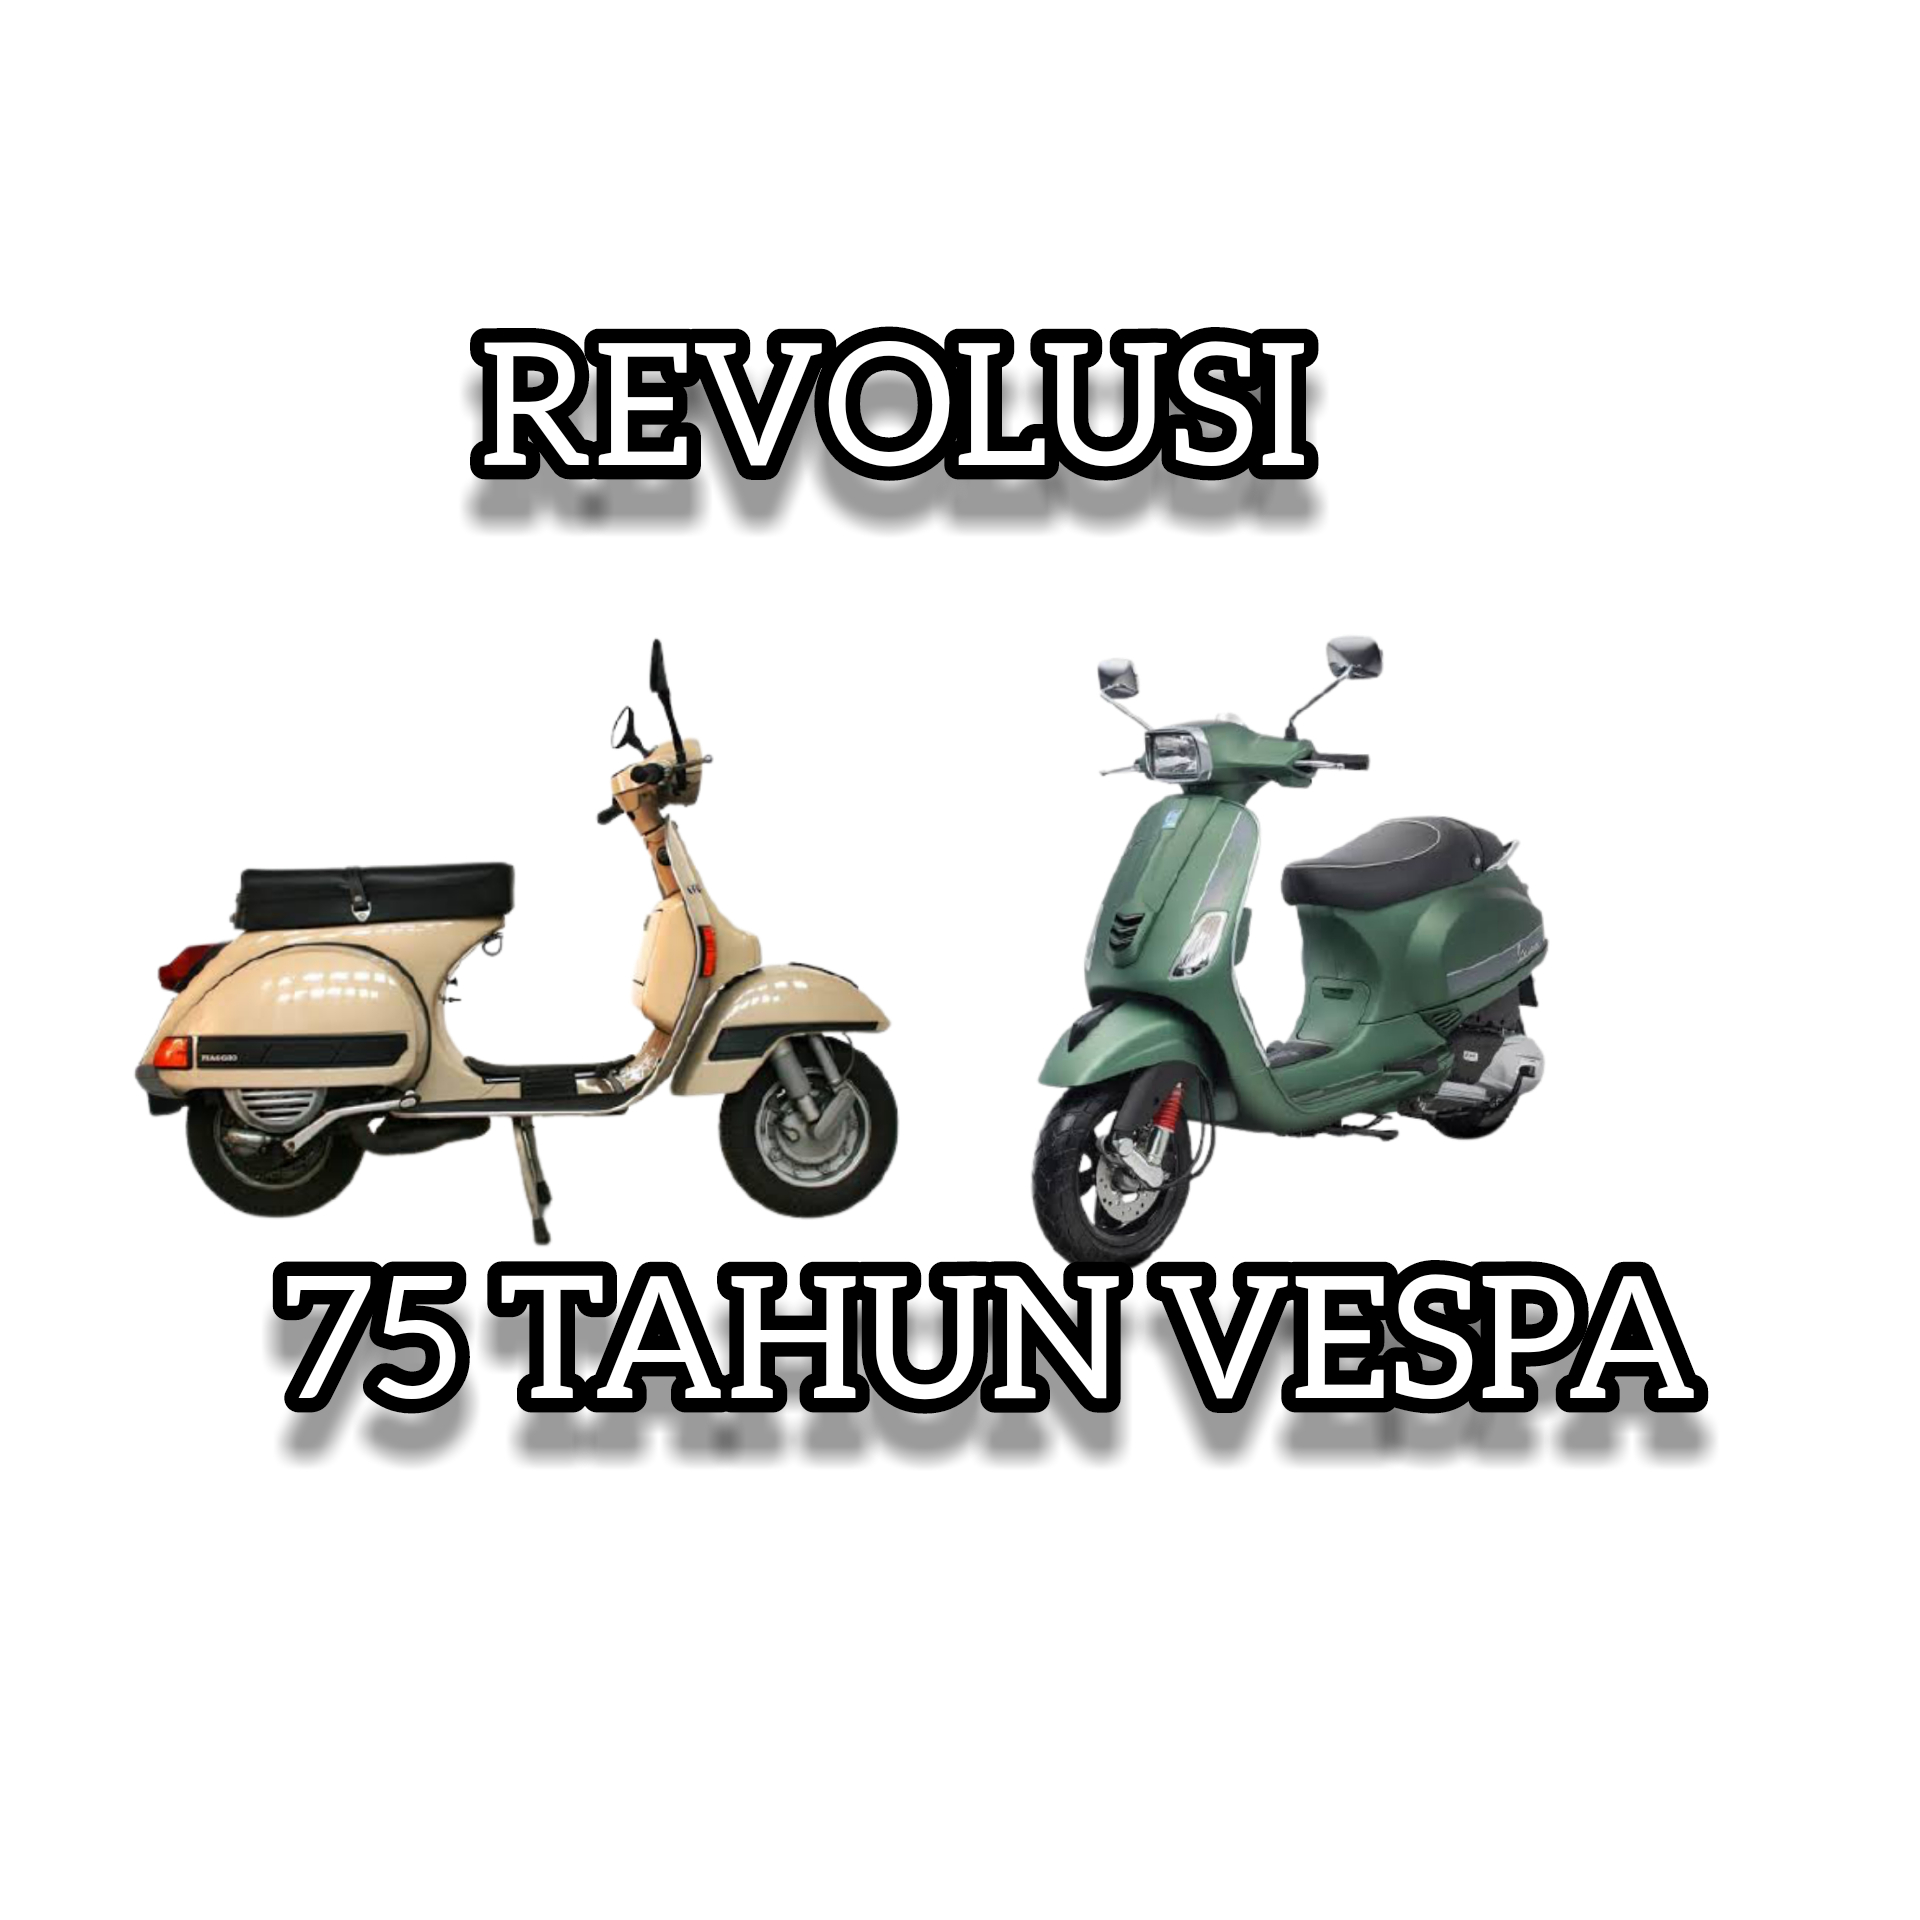 Revolusi Vespa